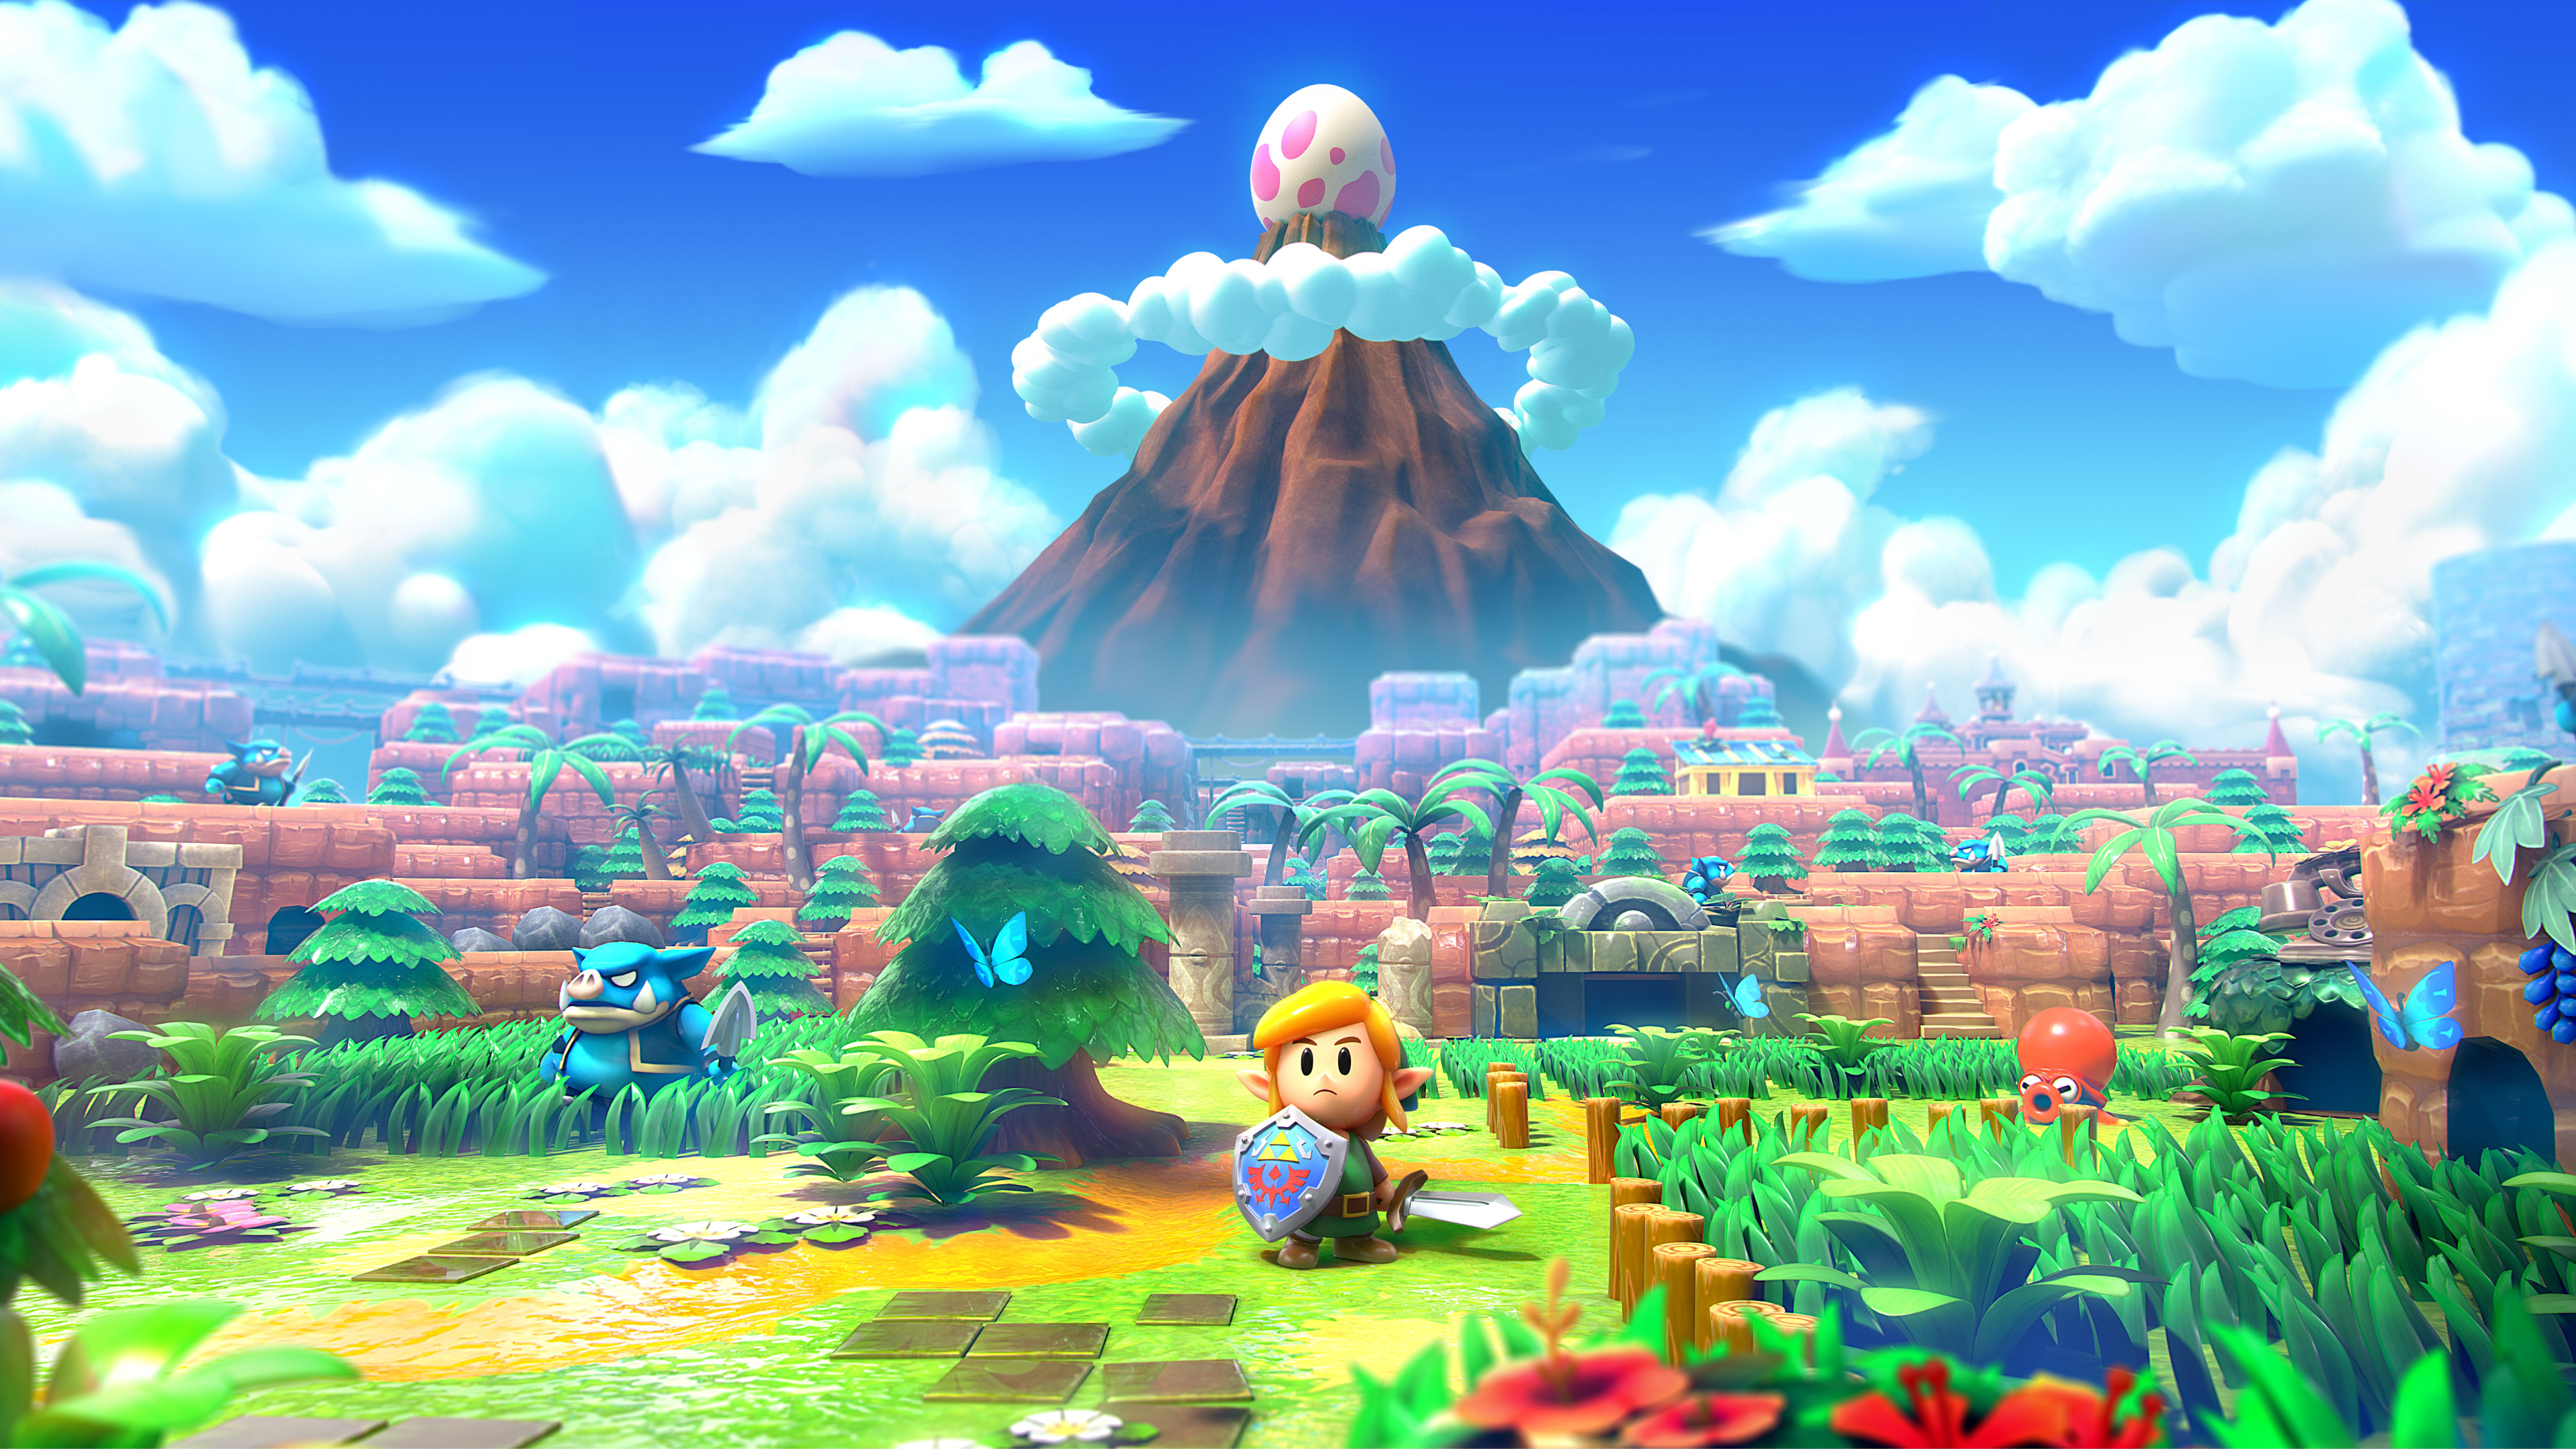 Video Game The Legend of Zelda: Link's Awakening (Nintendo Switch) HD Wallpaper | Background Image